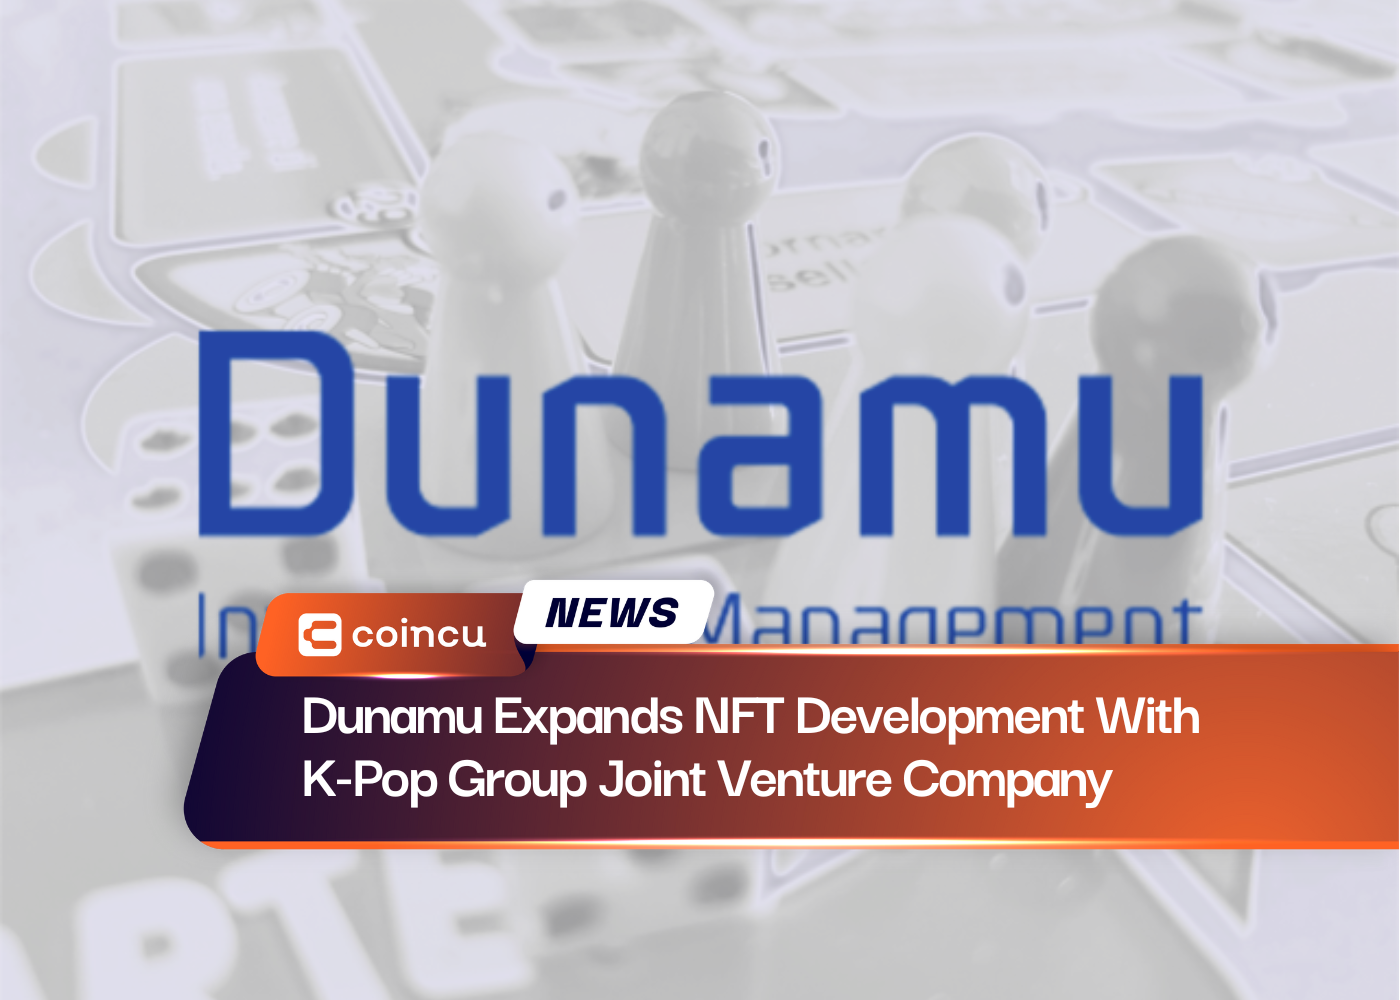 Dunamu Expands NFT Development With K-Pop Group Joint Venture Company